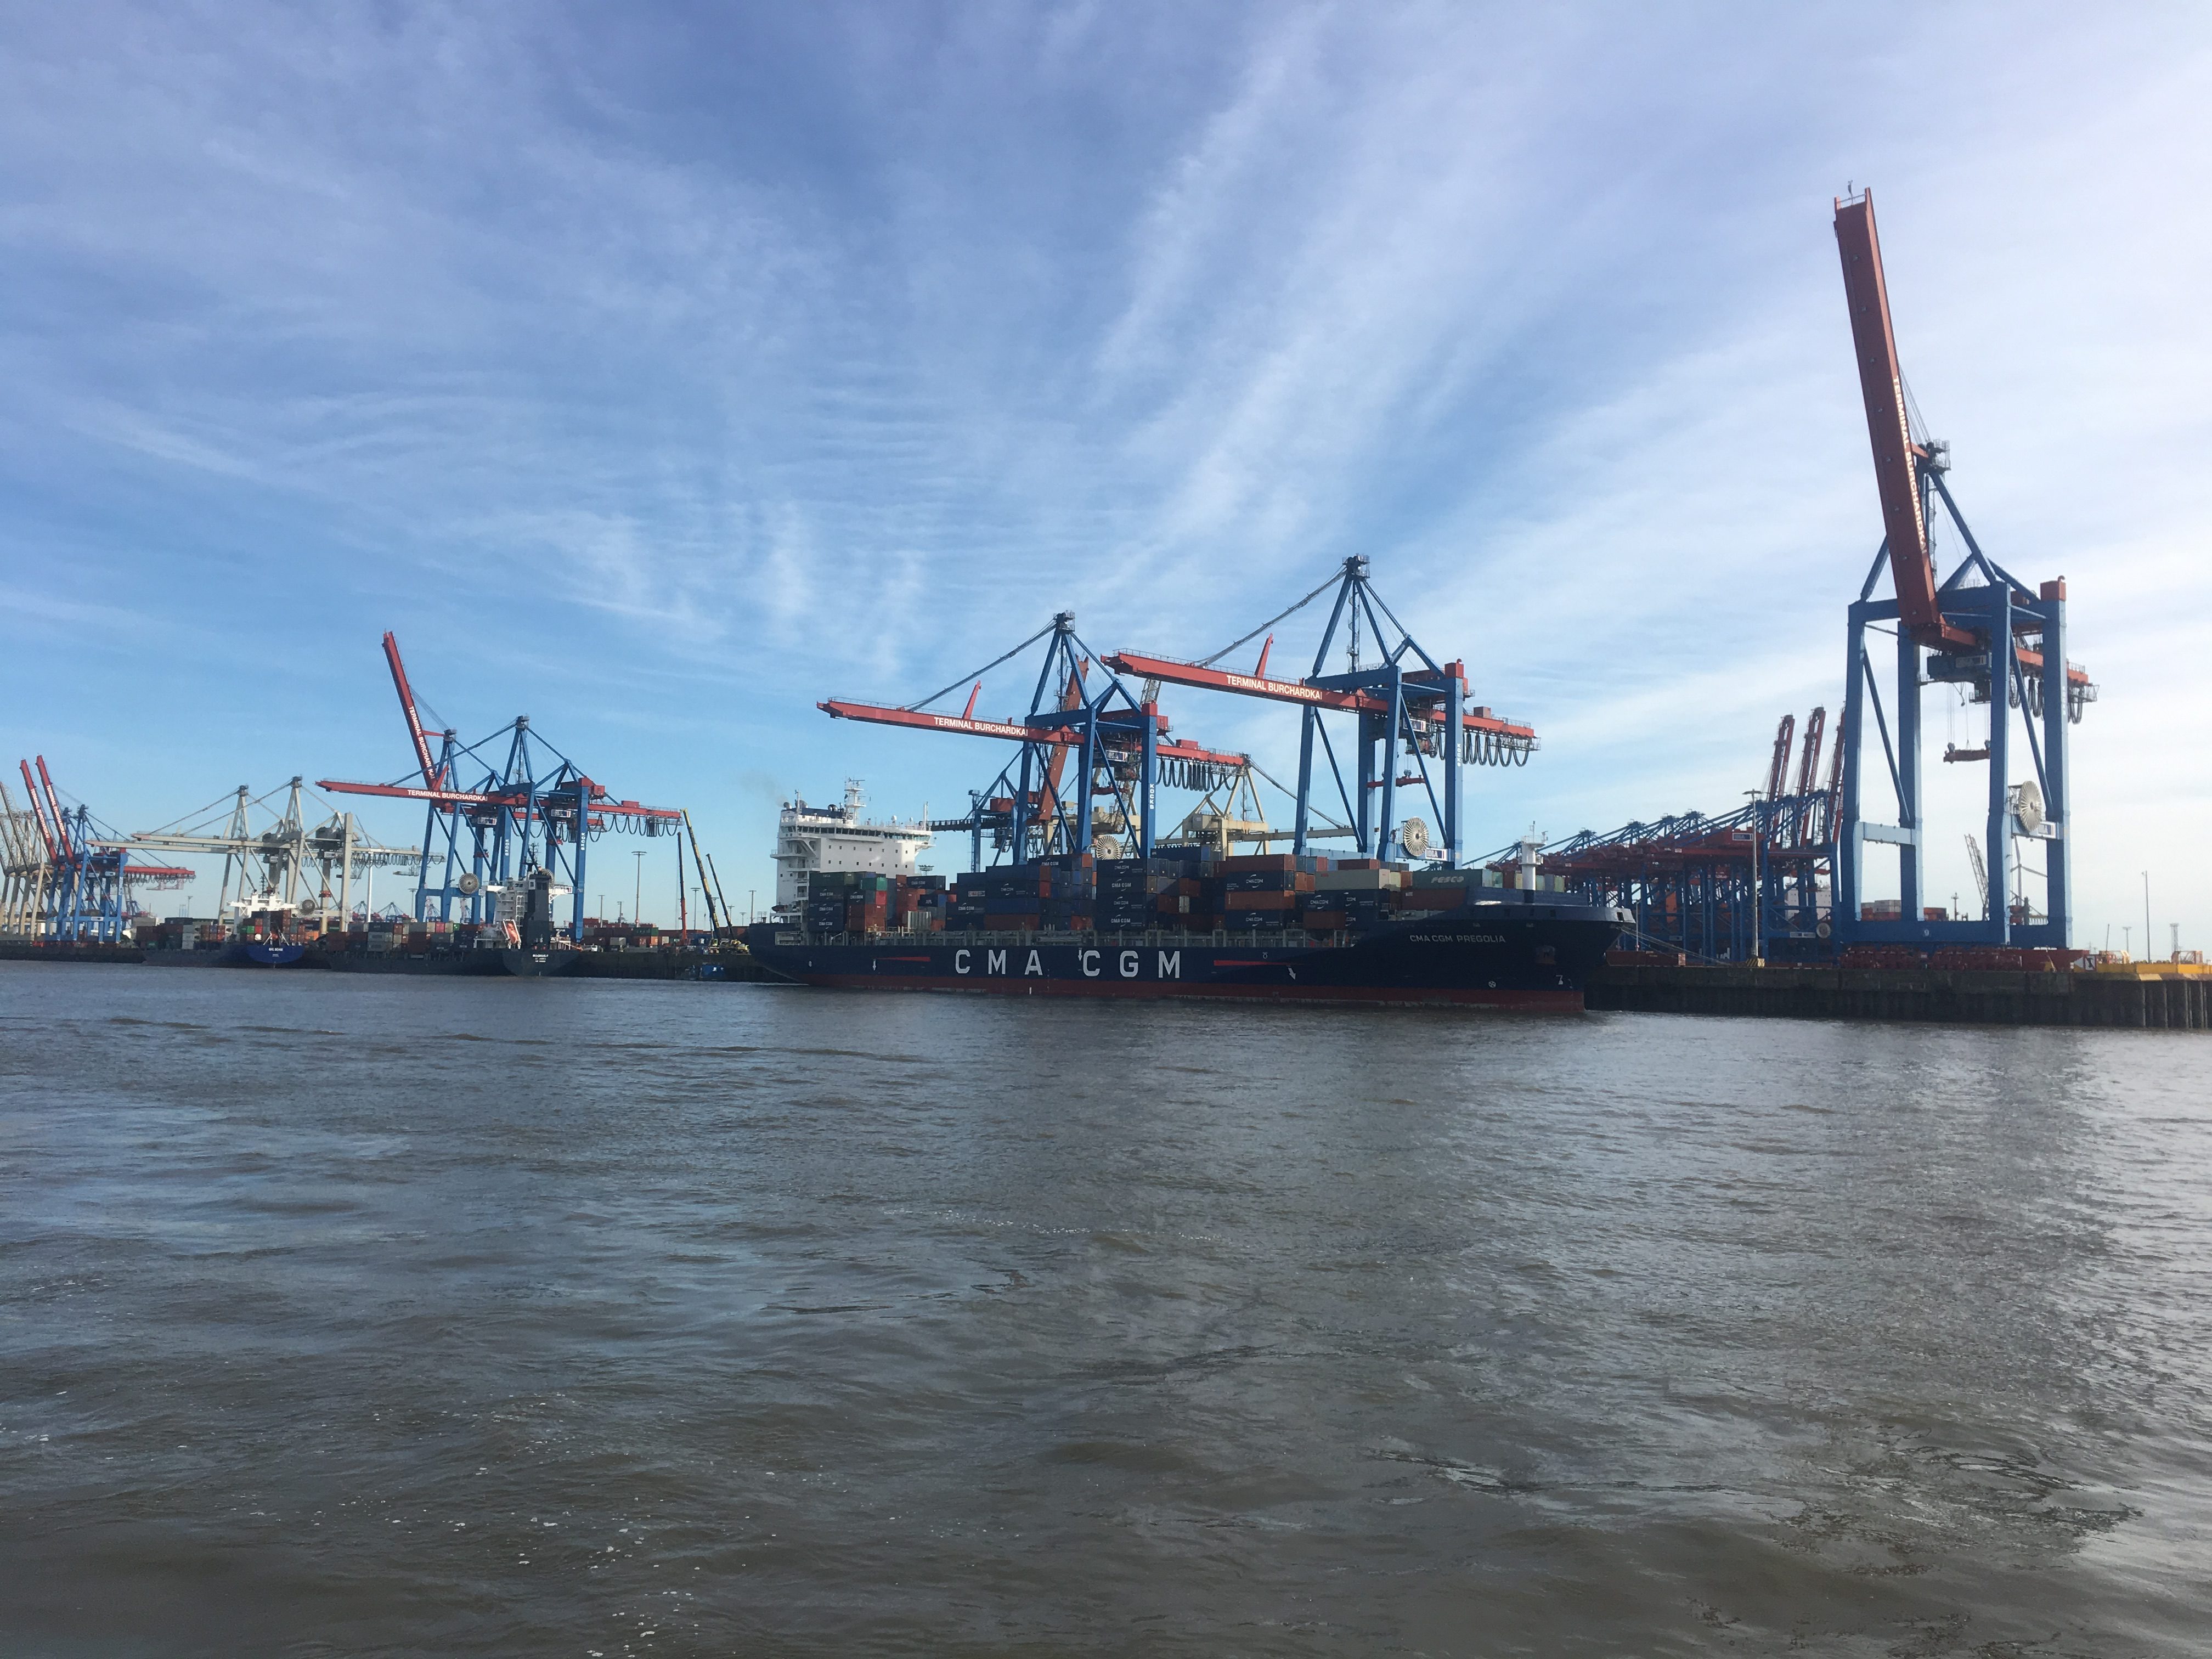 Hamburg Harbour